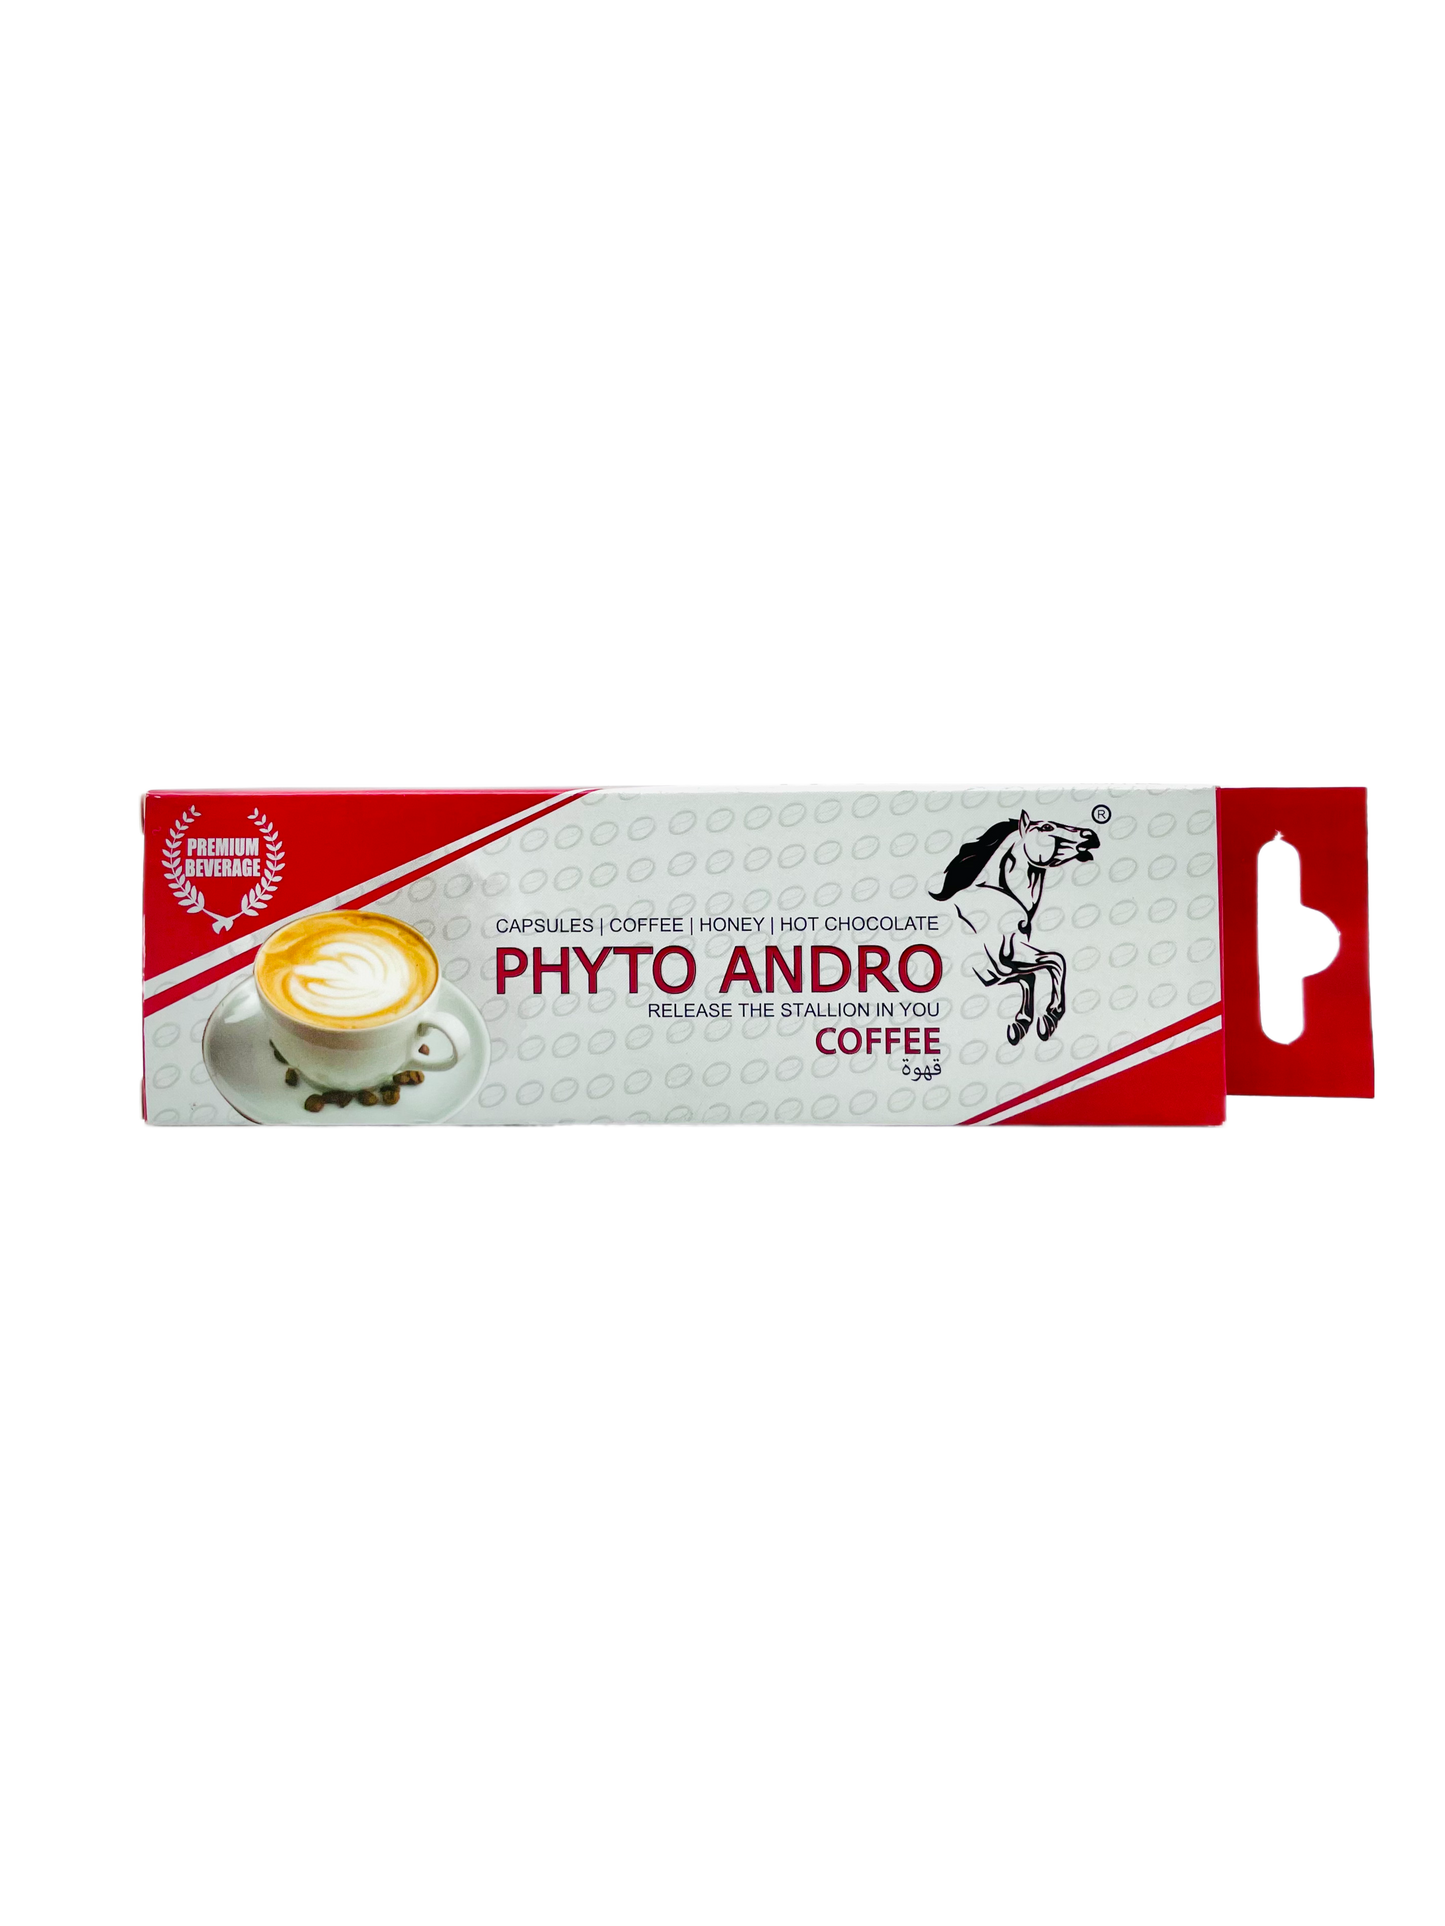 Phyto Andro Coffee Sachet 10g